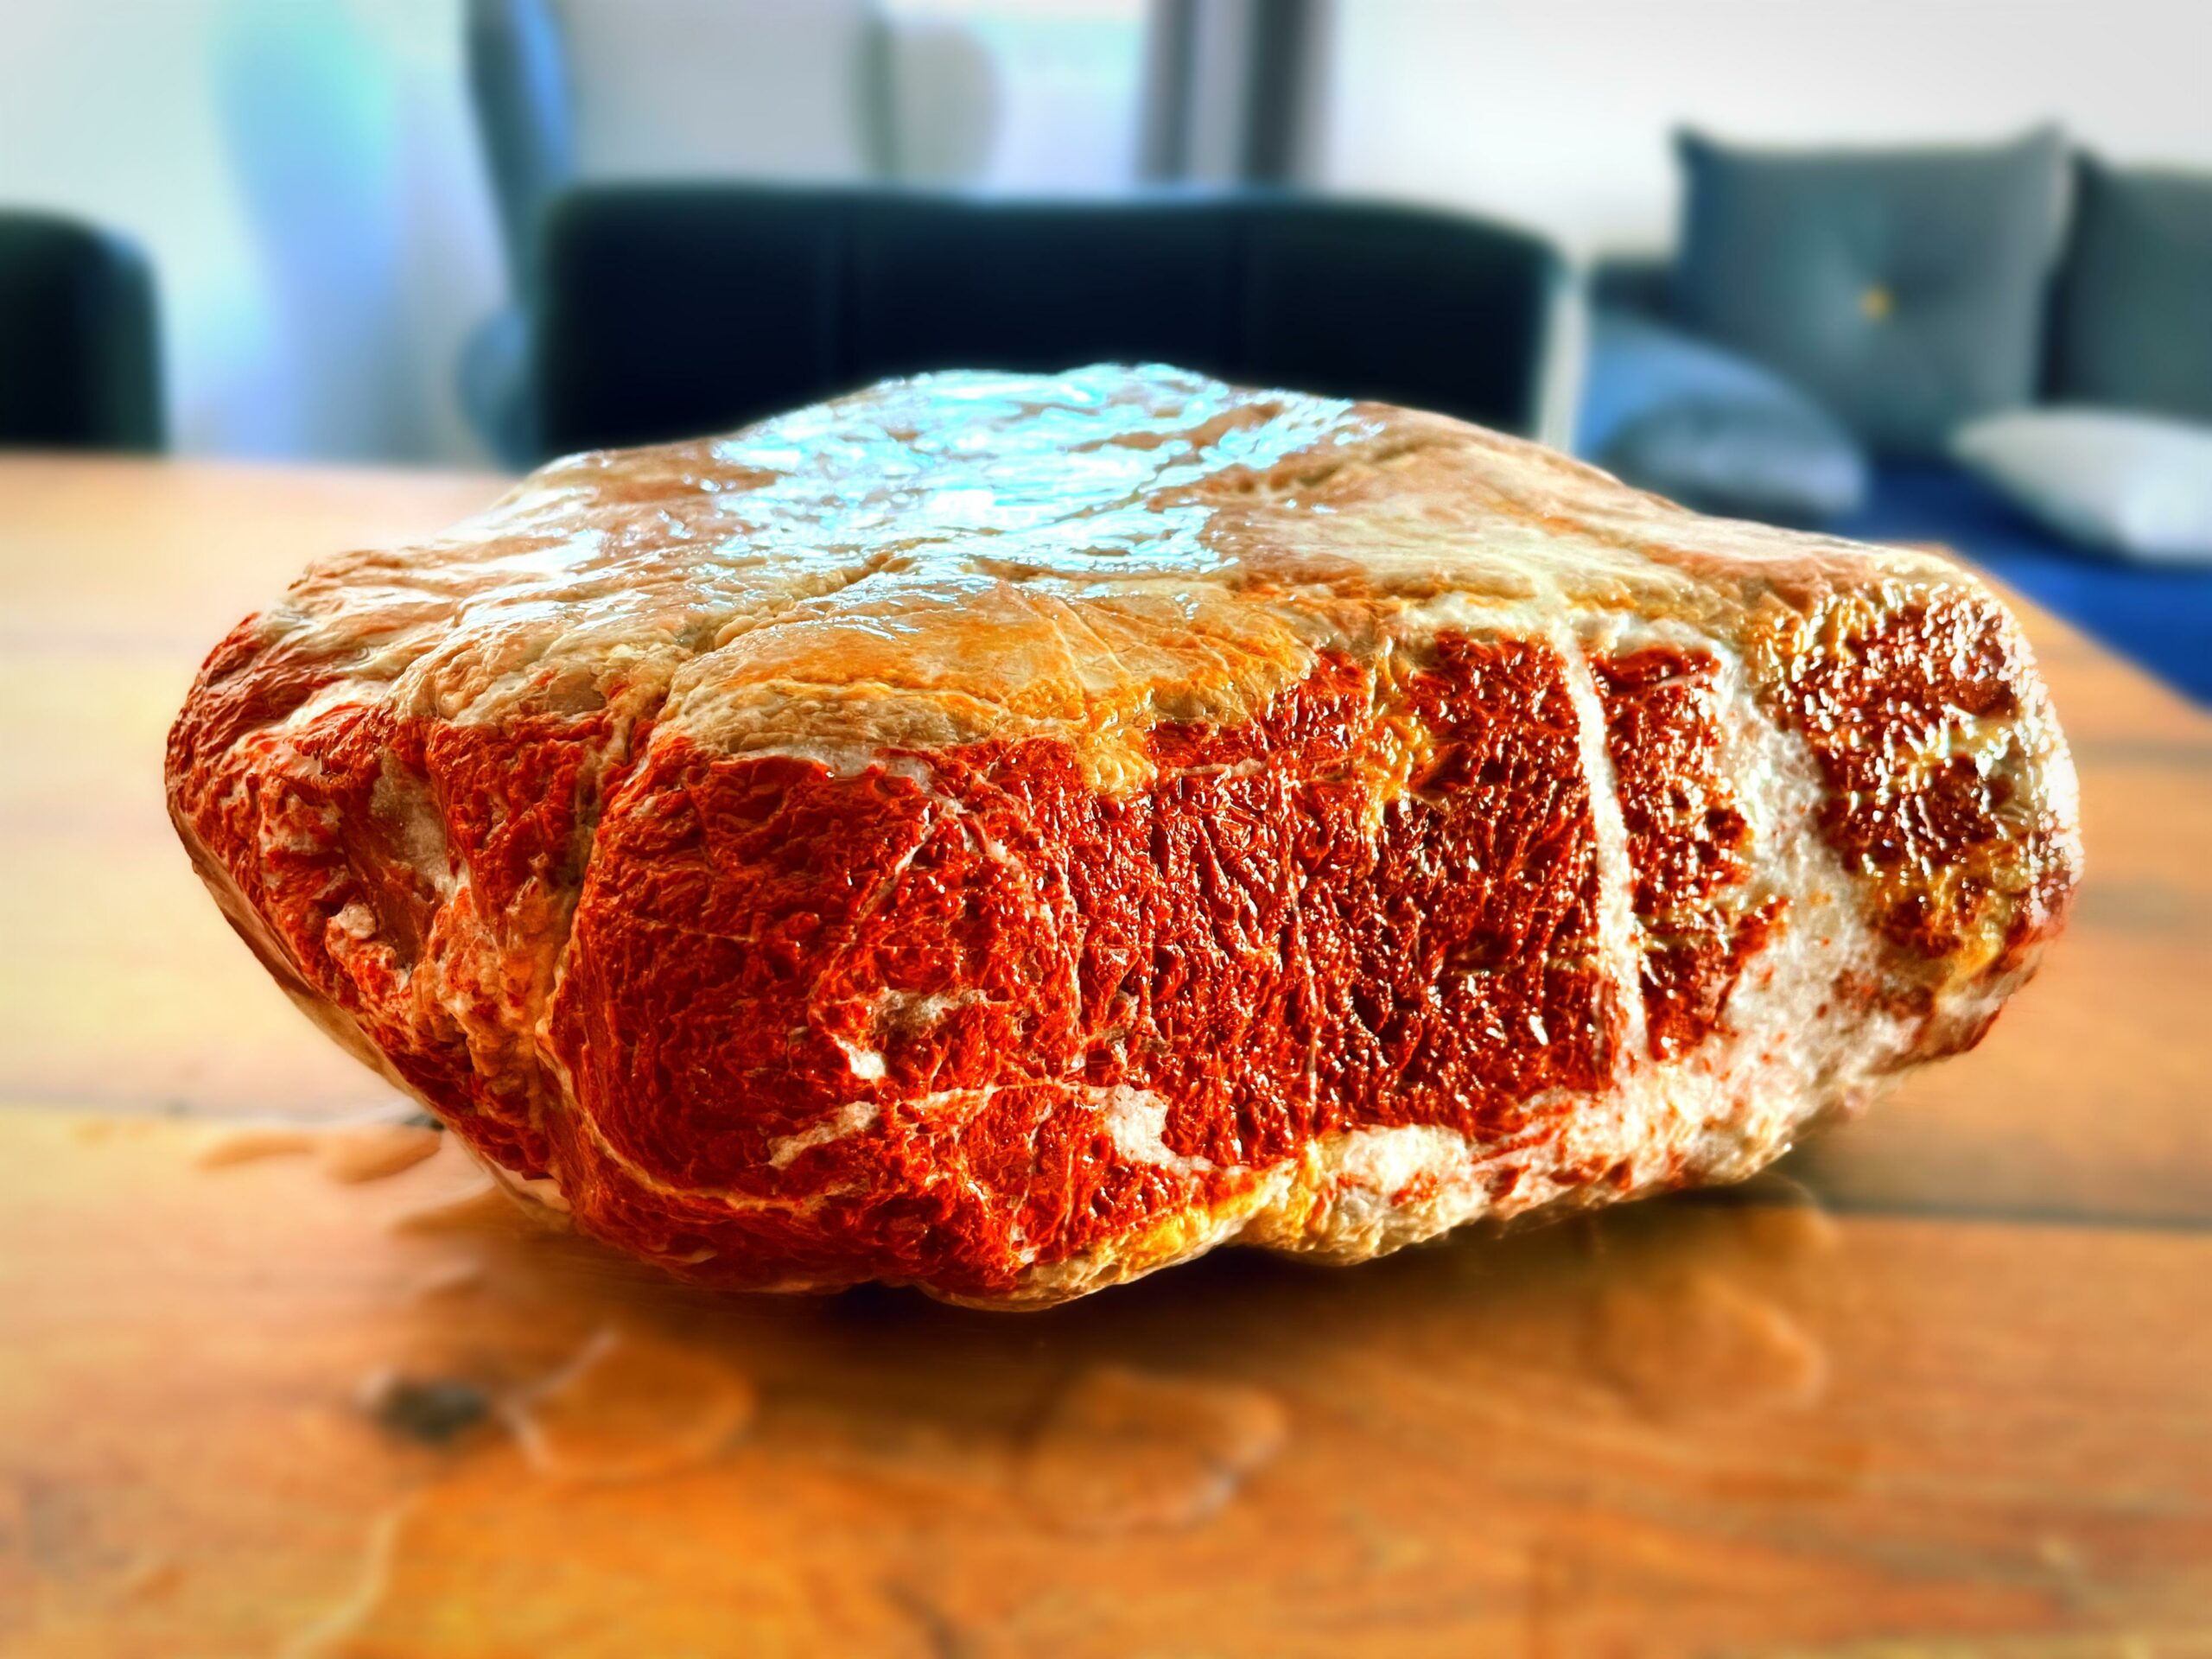 rock that looks like a piece of red steak